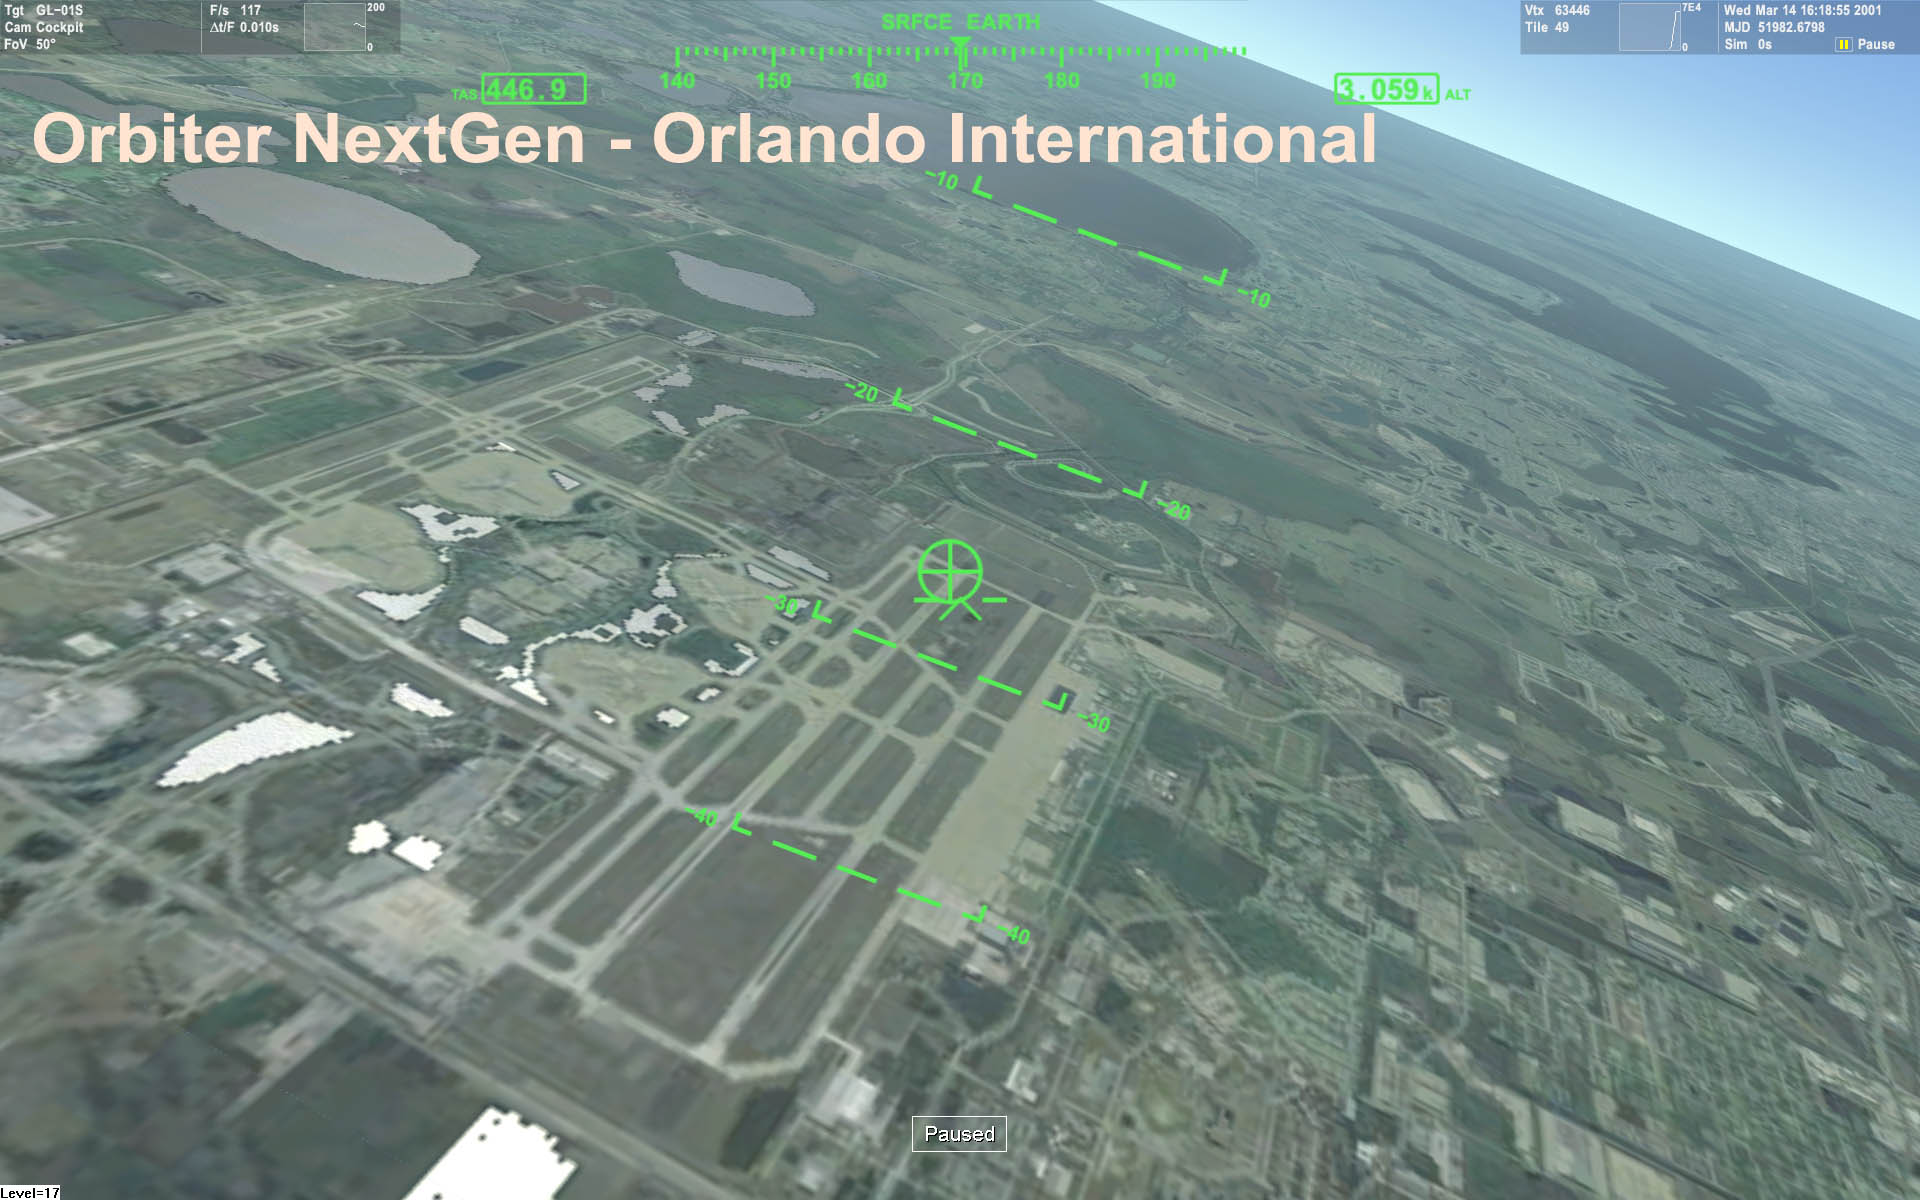 Orlando International: Orbiter NextGen with new planet renderer.